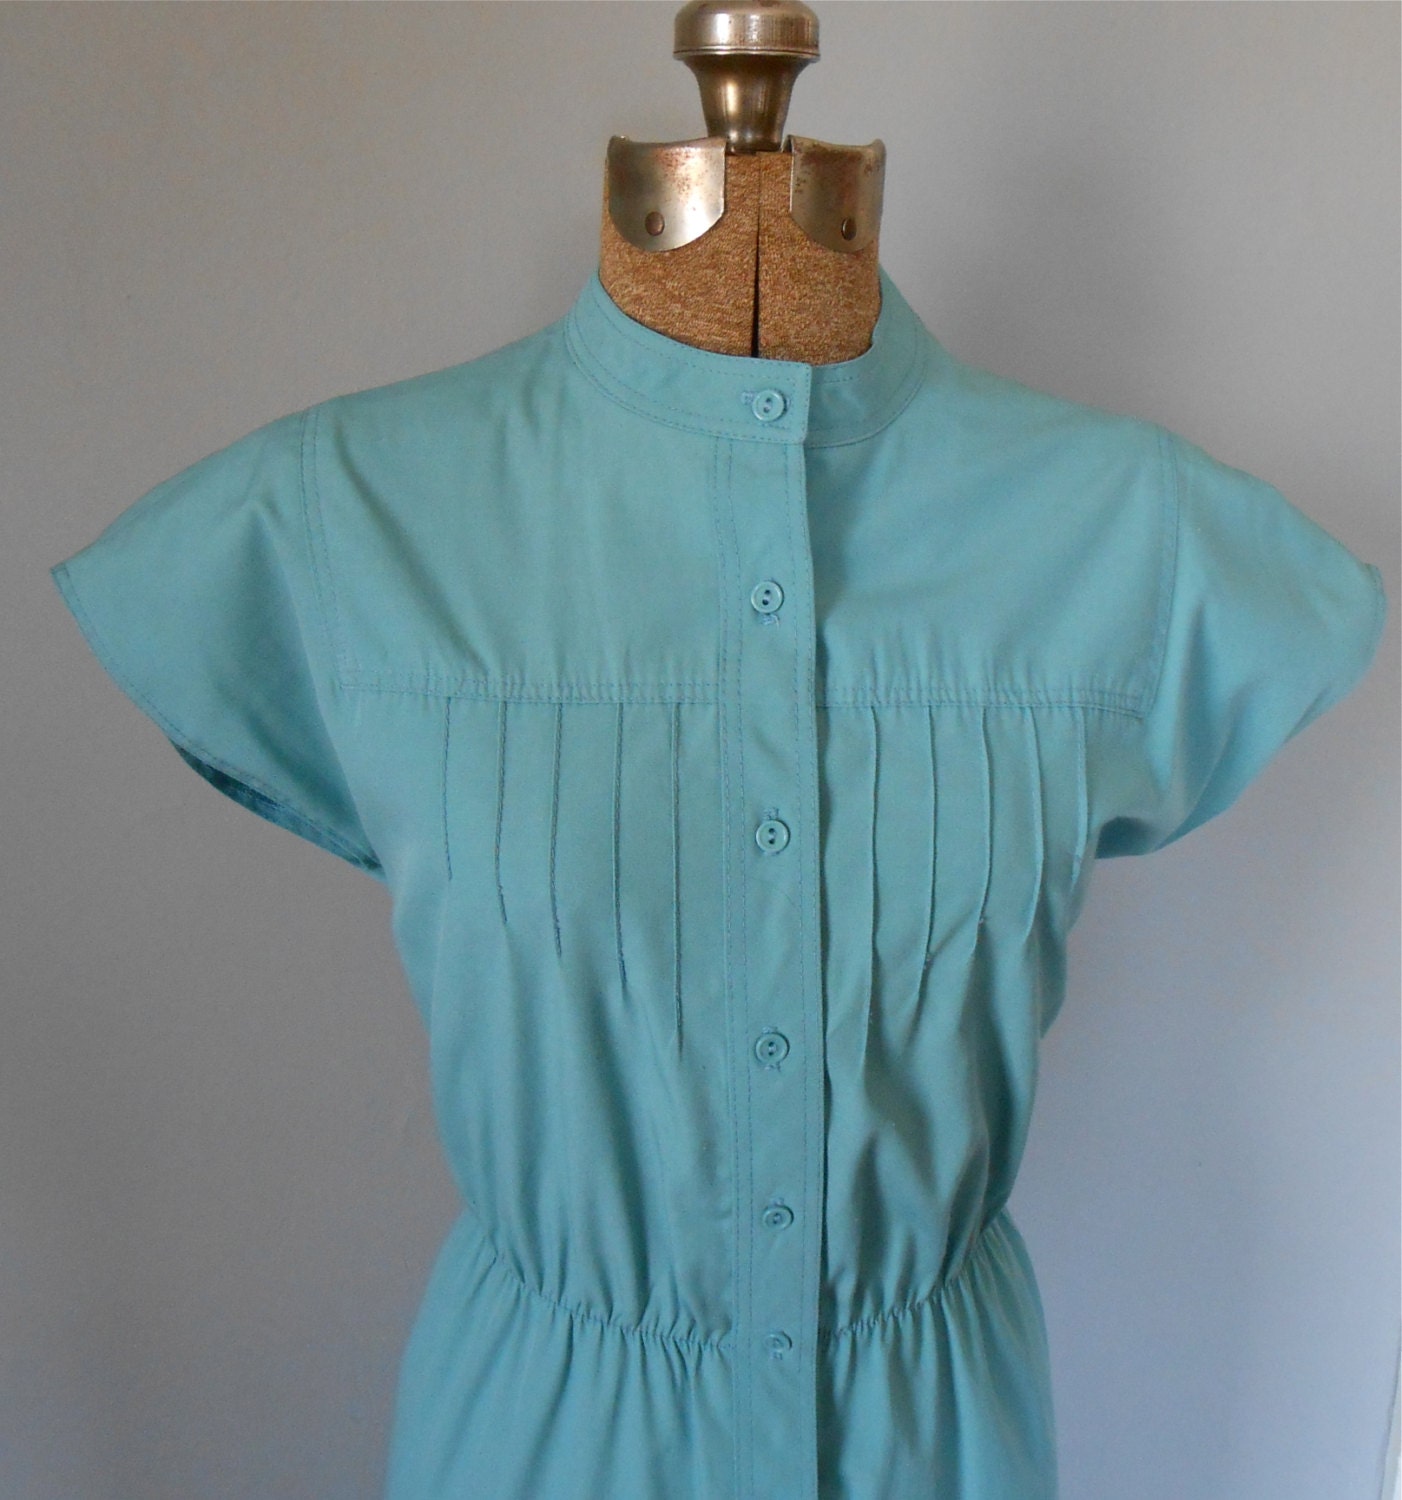 Cotton Shirt Dress Robins Egg Blue Vintage Women's by MDMvintage